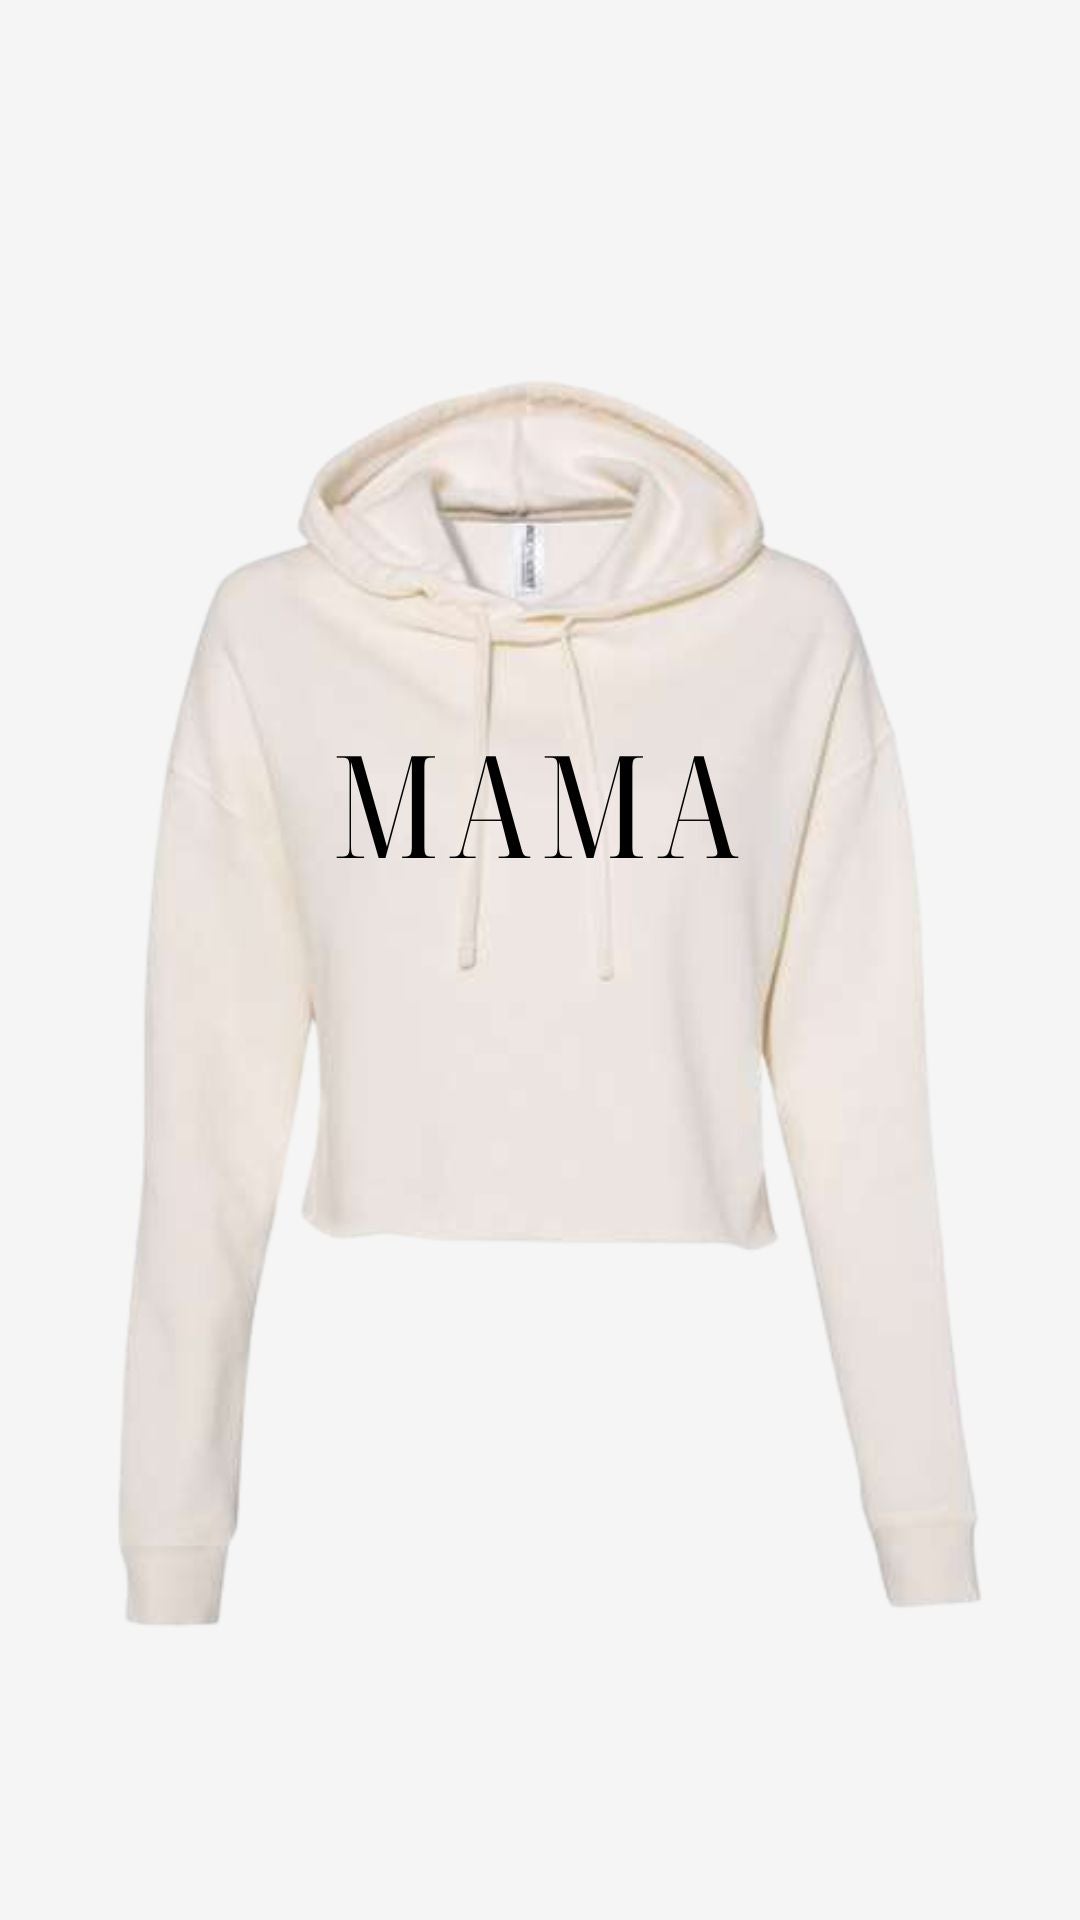 Mama Cropped Hoodies (Custom)